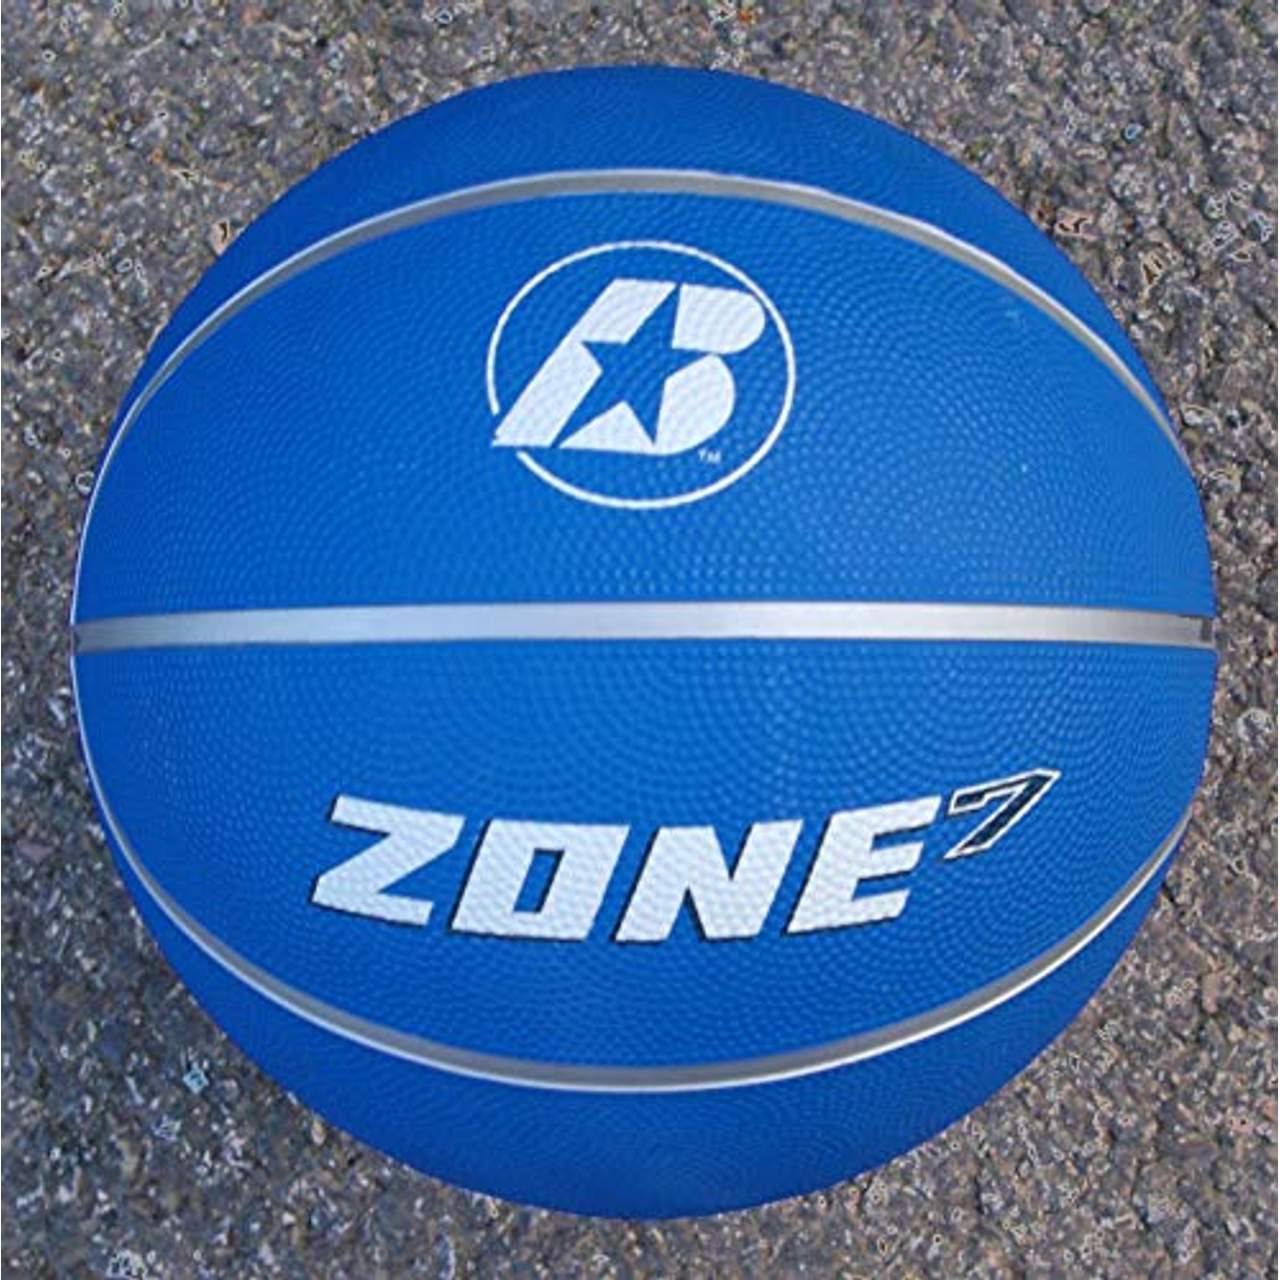 Baden Unisex Basketball Zone 7